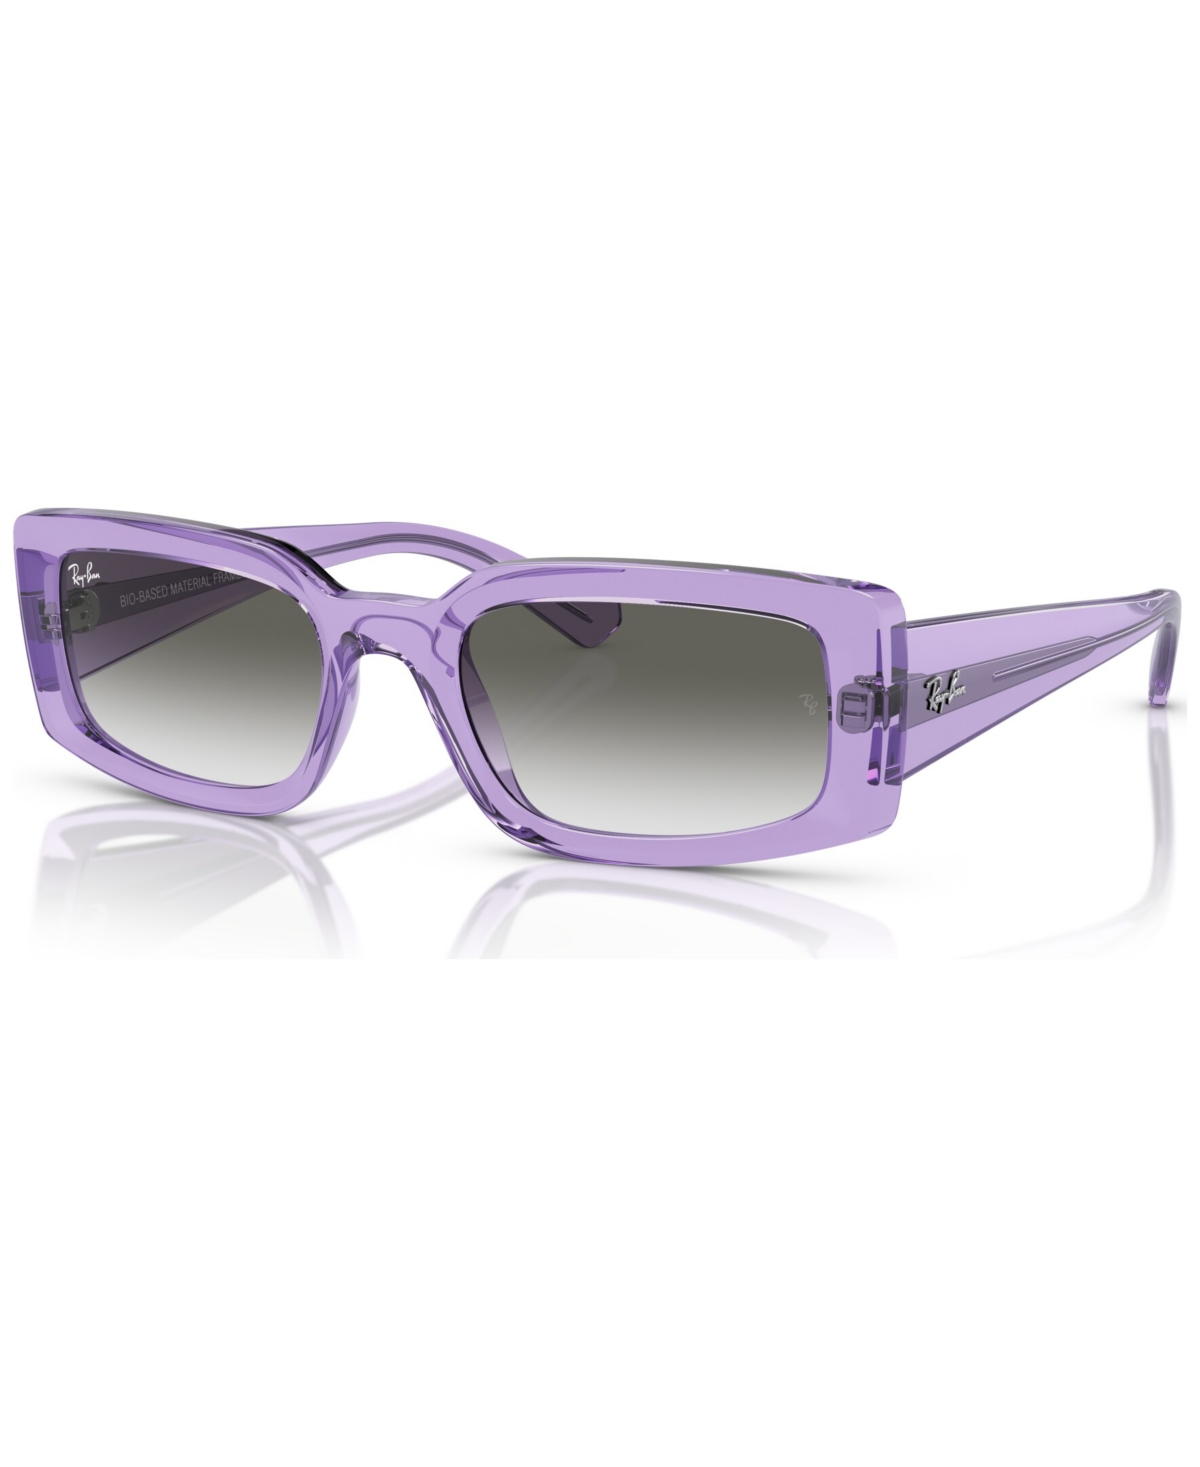 Ray Ban Unisex Low Bridge Fit Sunglasses, Kiliane In Transparent Violet